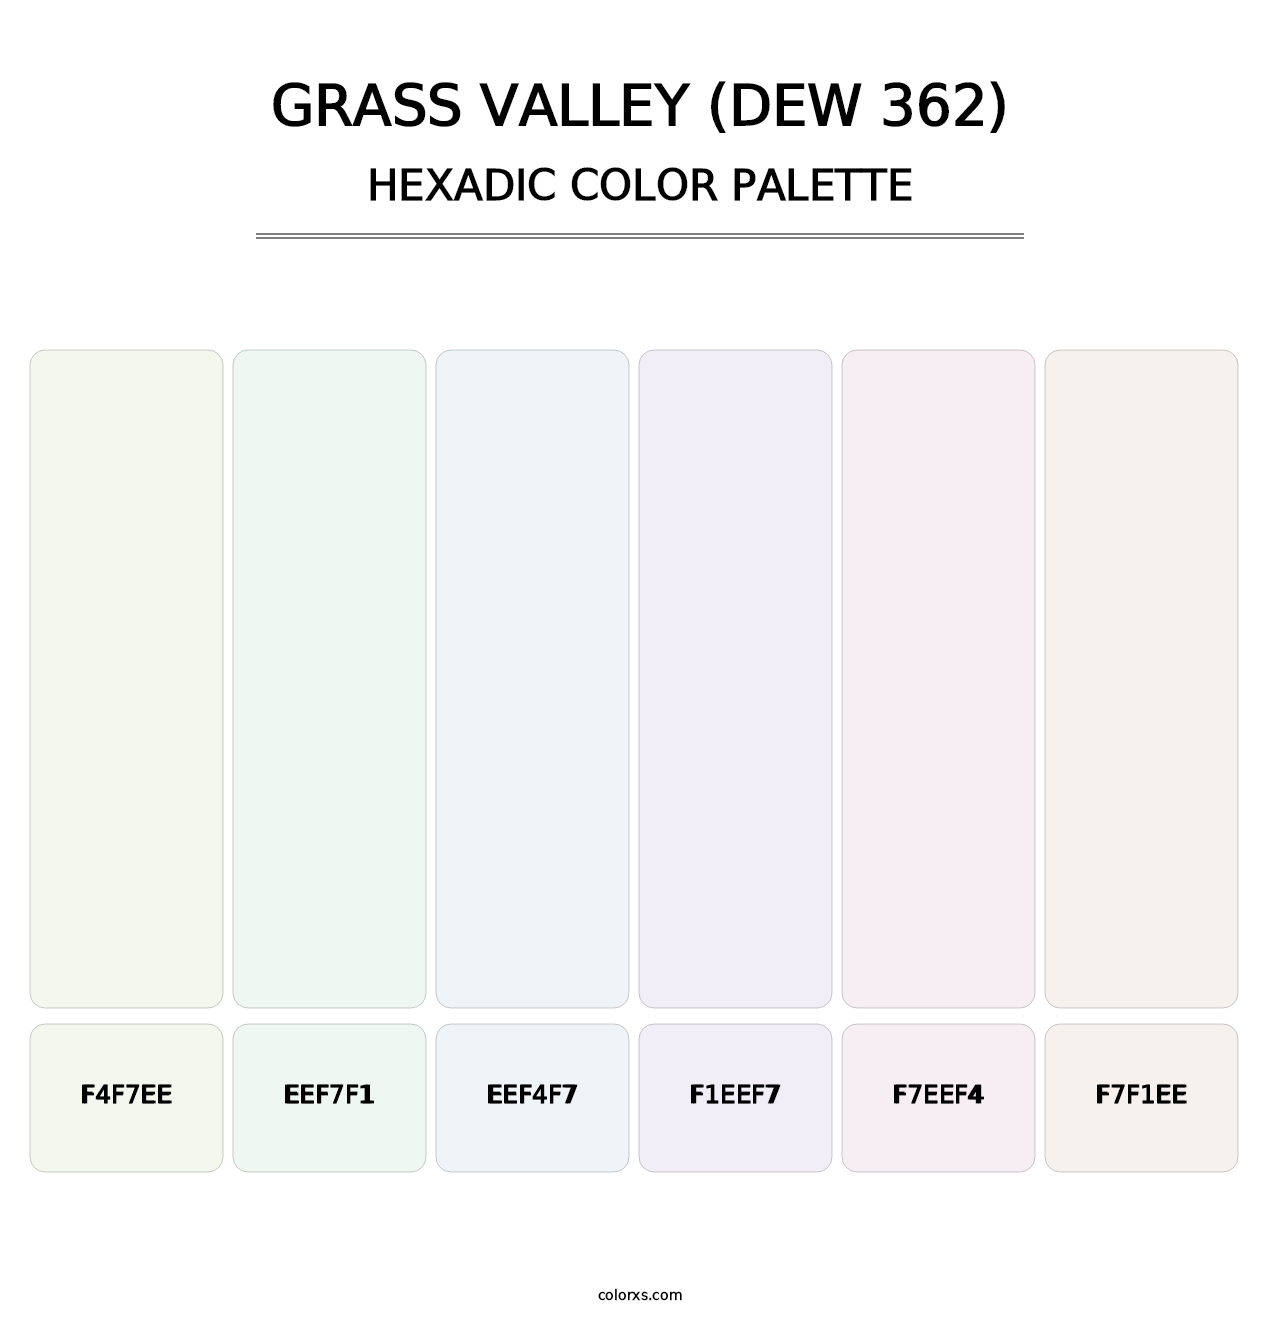 Grass Valley (DEW 362) - Hexadic Color Palette